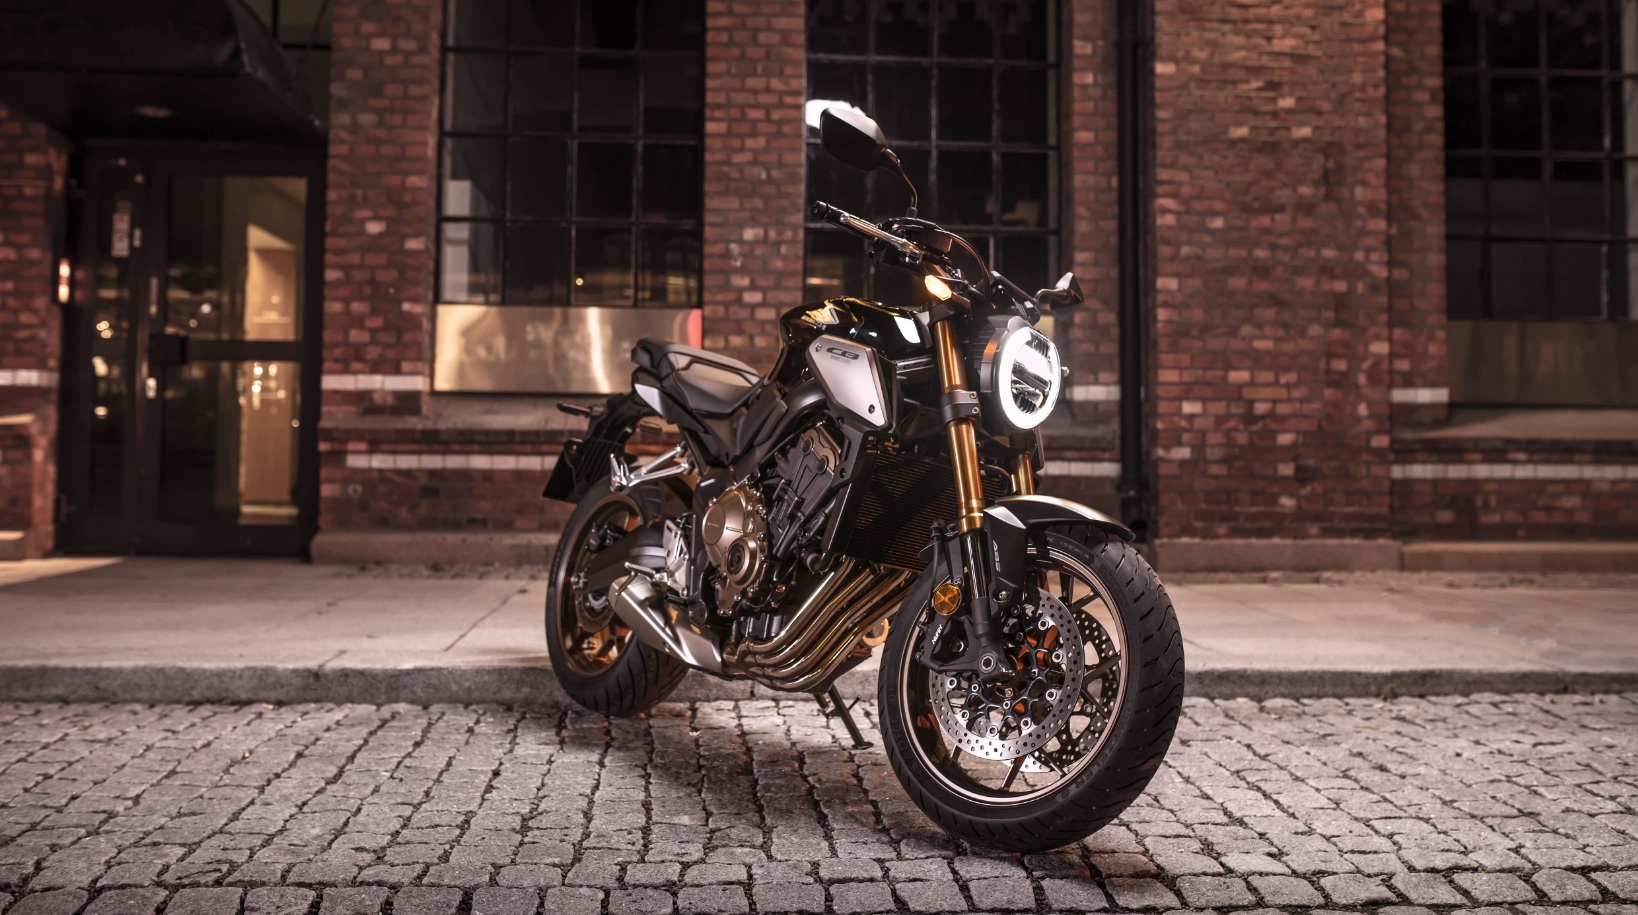 Honda CB650R, rétro et minimaliste - Auto-Moto Magazine